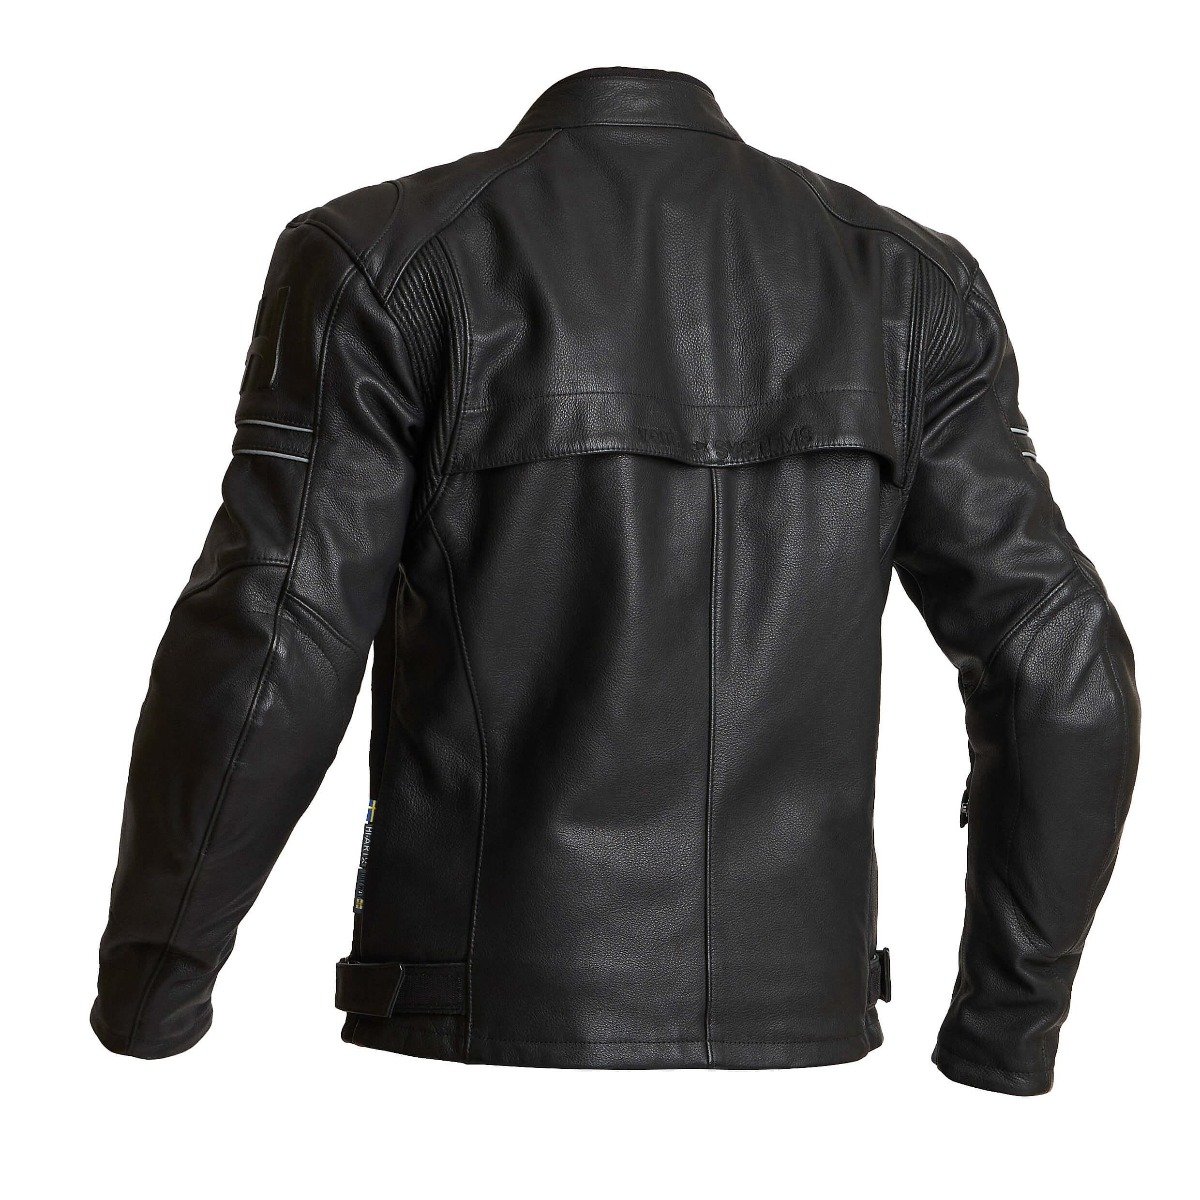 Image of Halvarssons Selja Jacket Black Size 48 EN